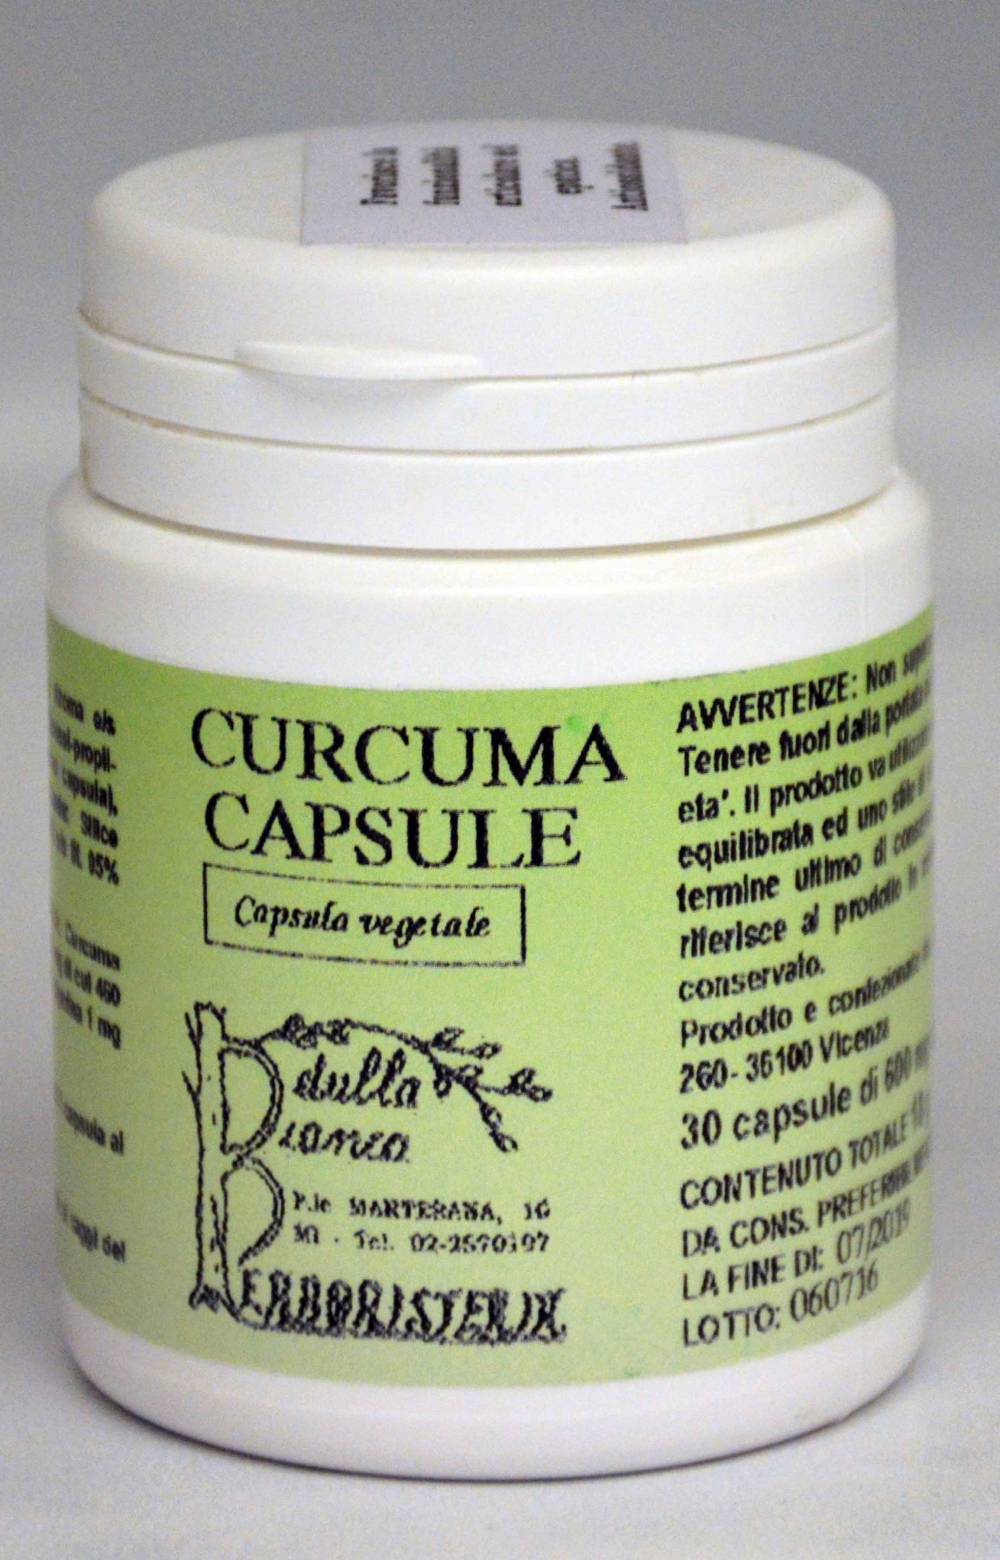 Curcuma capsule